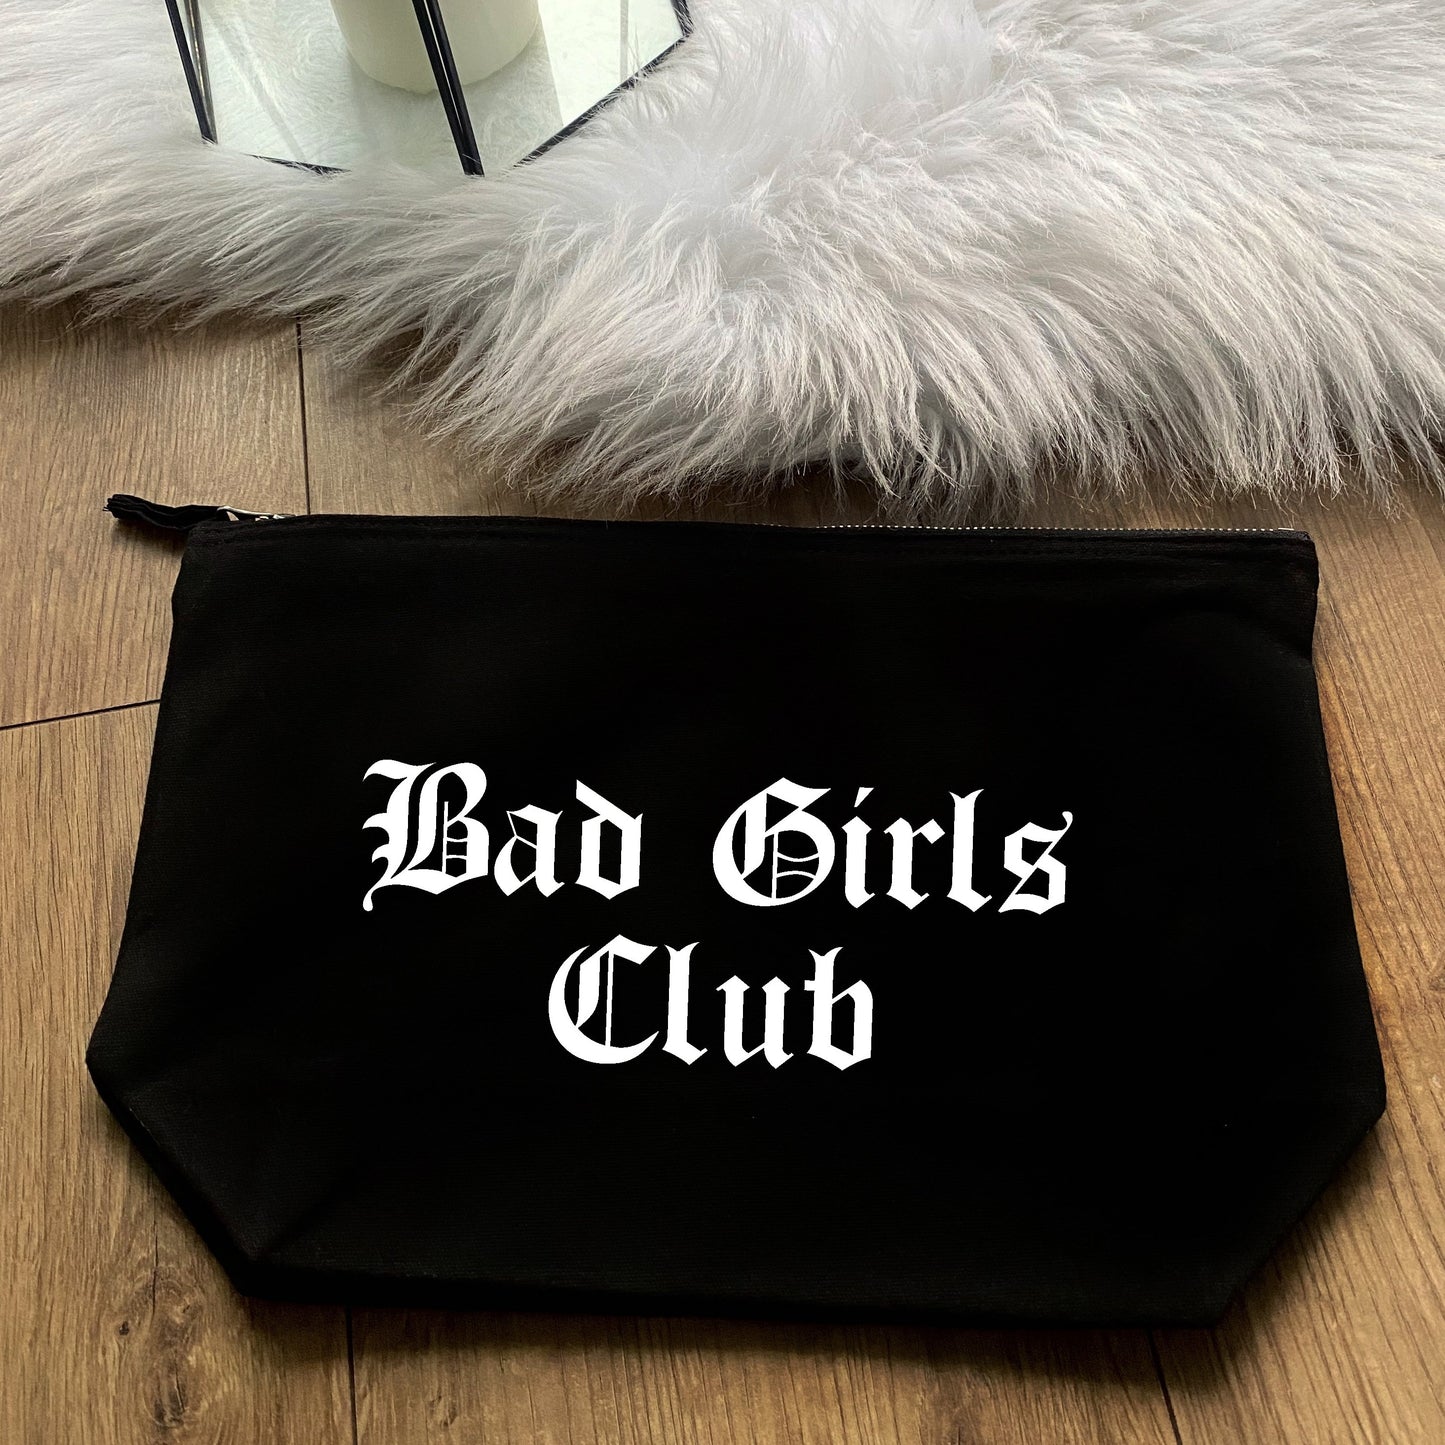 BAD GIRLS CLUB MAKE UP ACCESSORY BAG